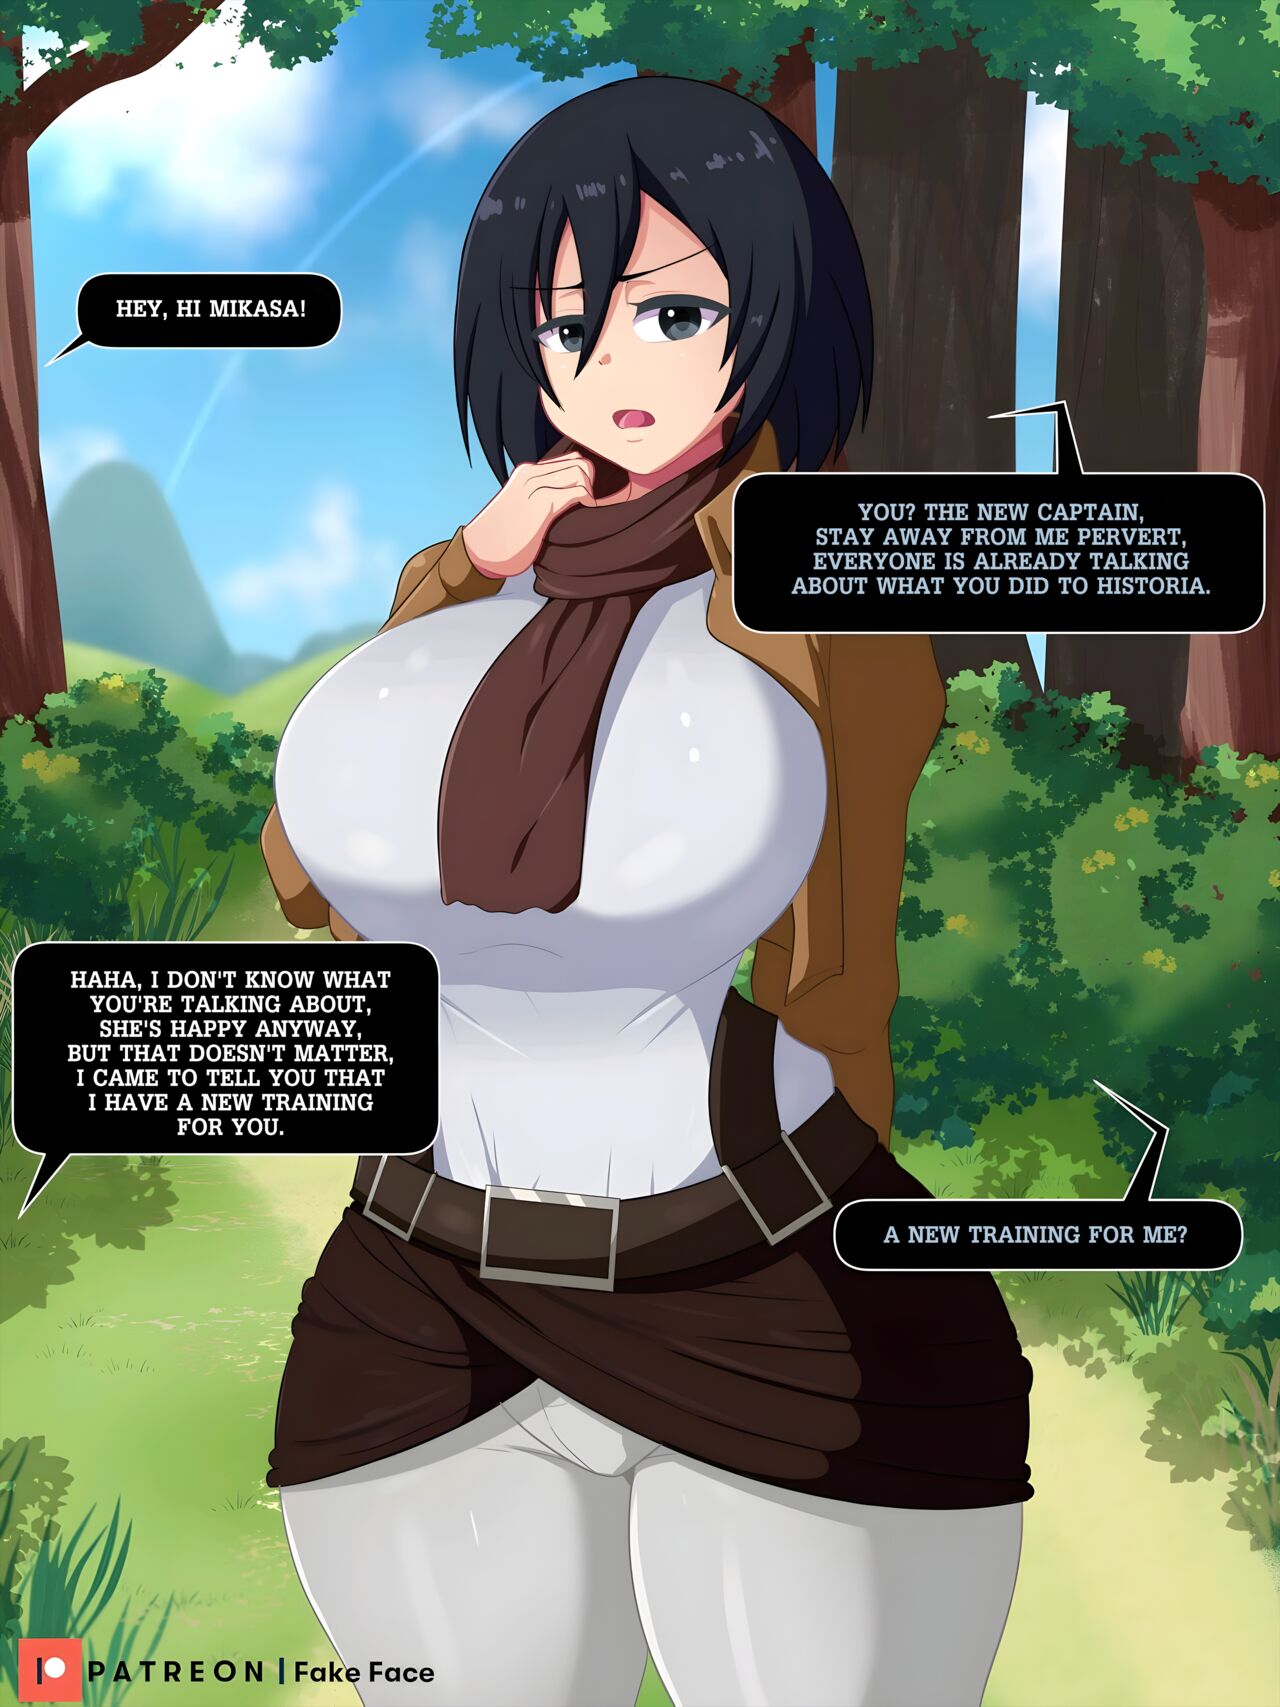 Mikasa naked comic